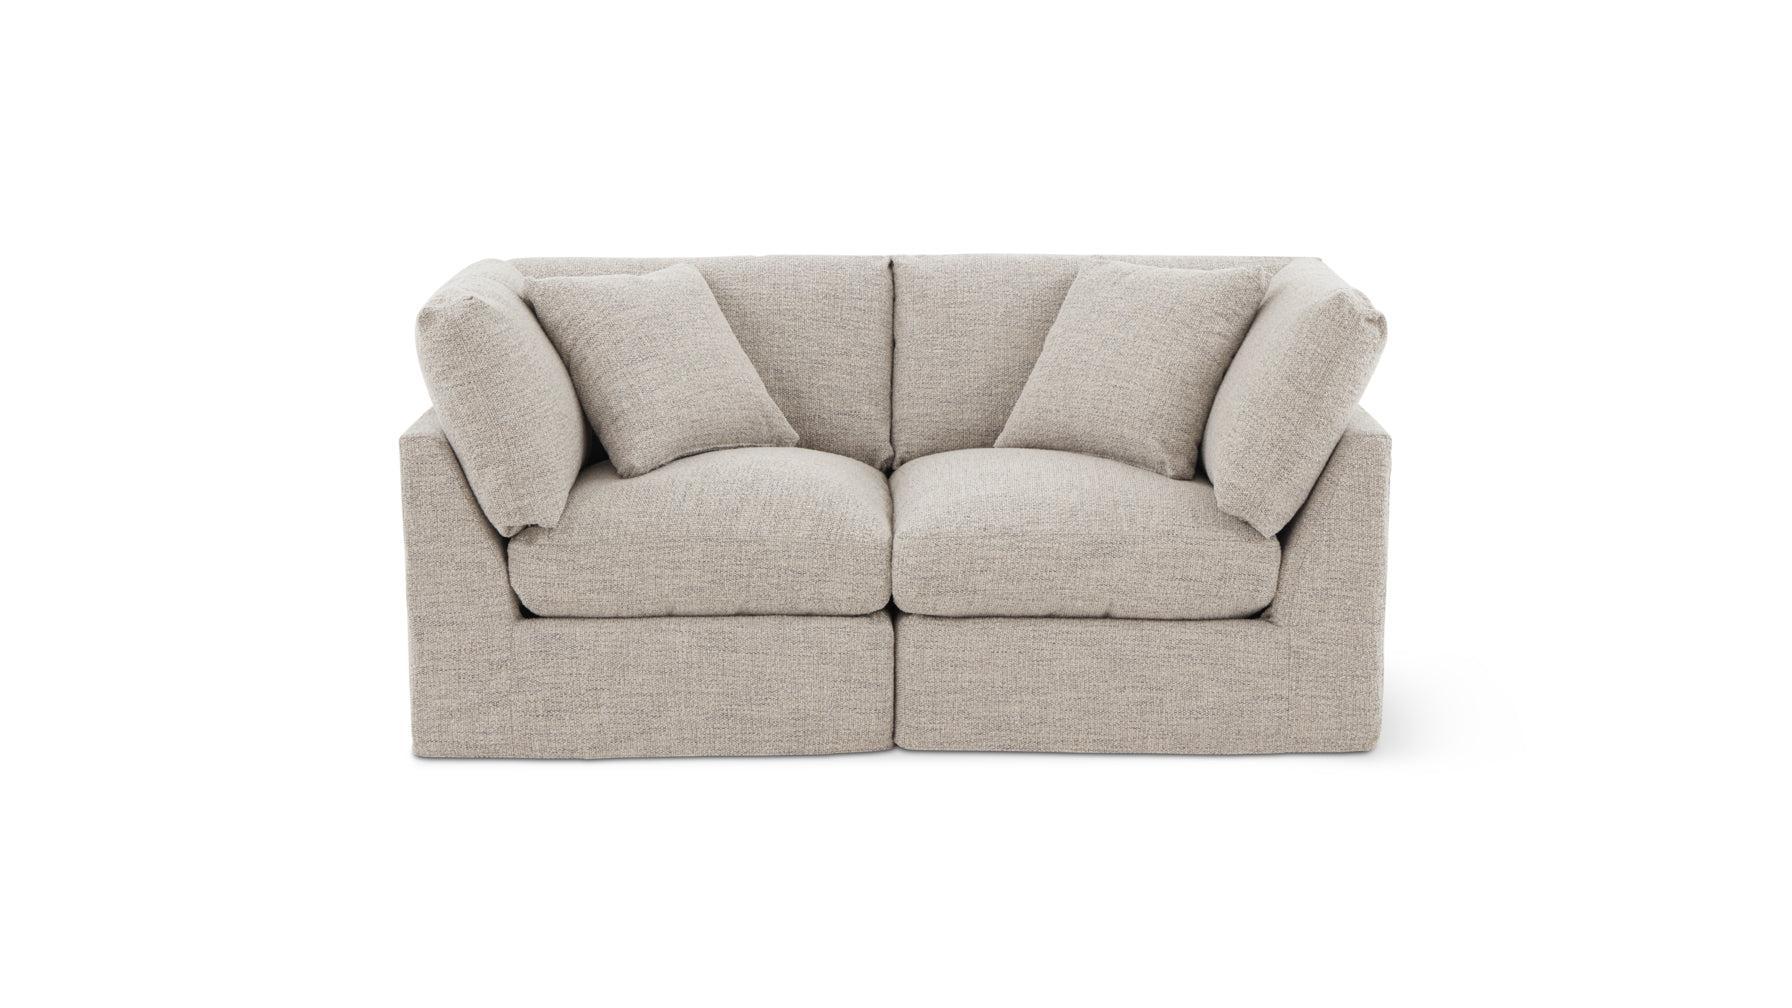 Get Together™ 2-Piece Modular Sofa, Standard, Oatmeal - Image 1